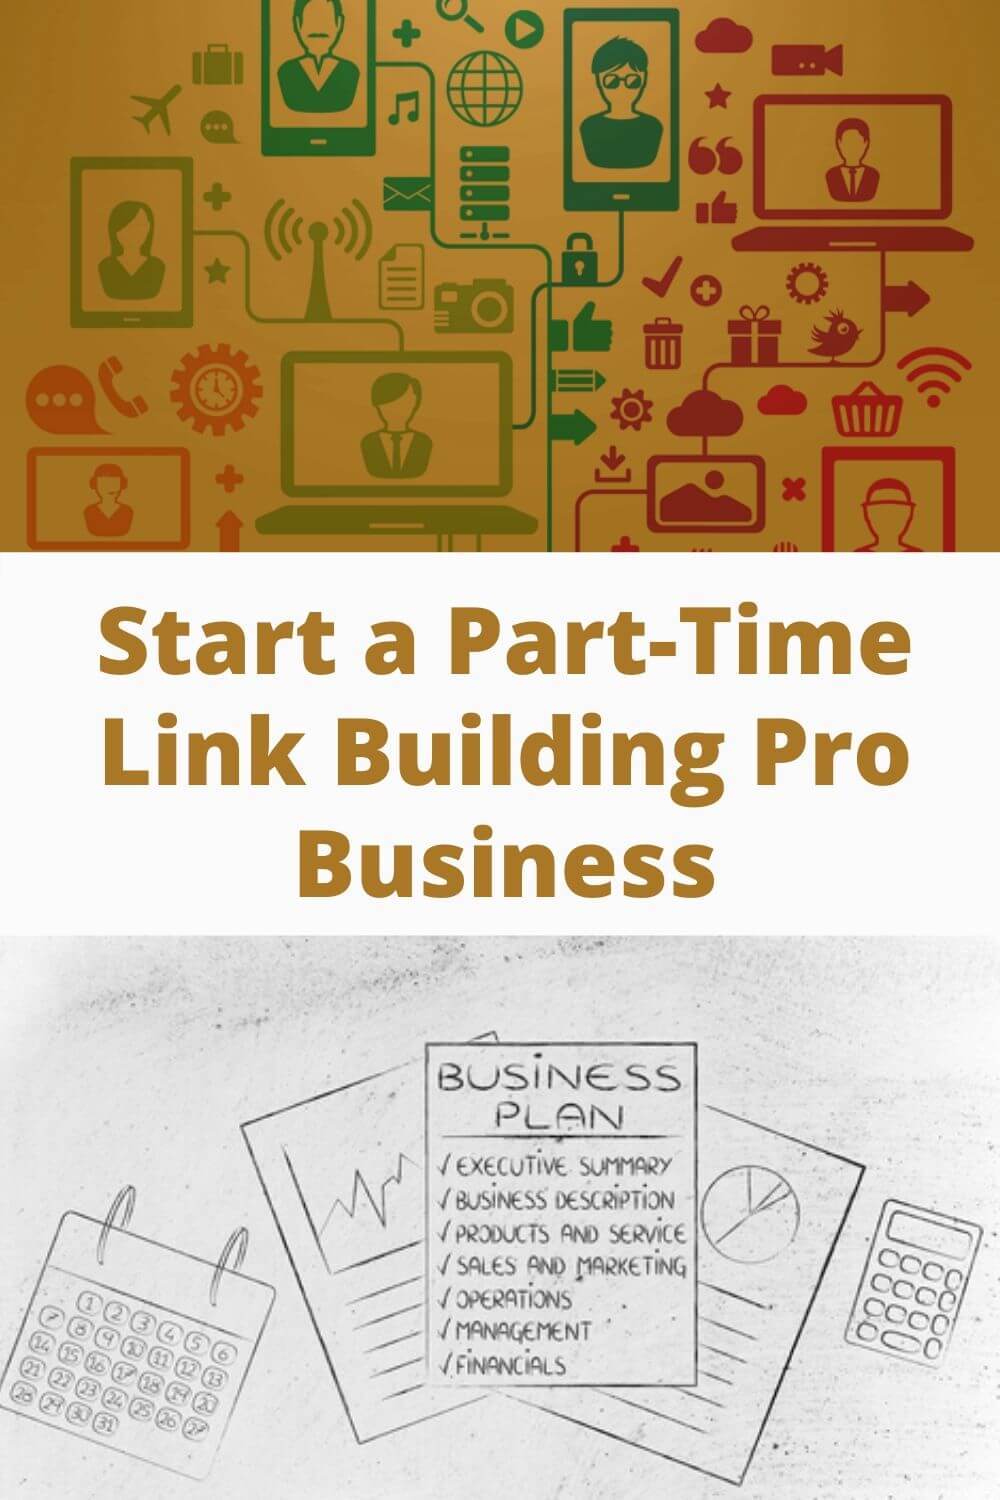 Start a part-time link building pro business